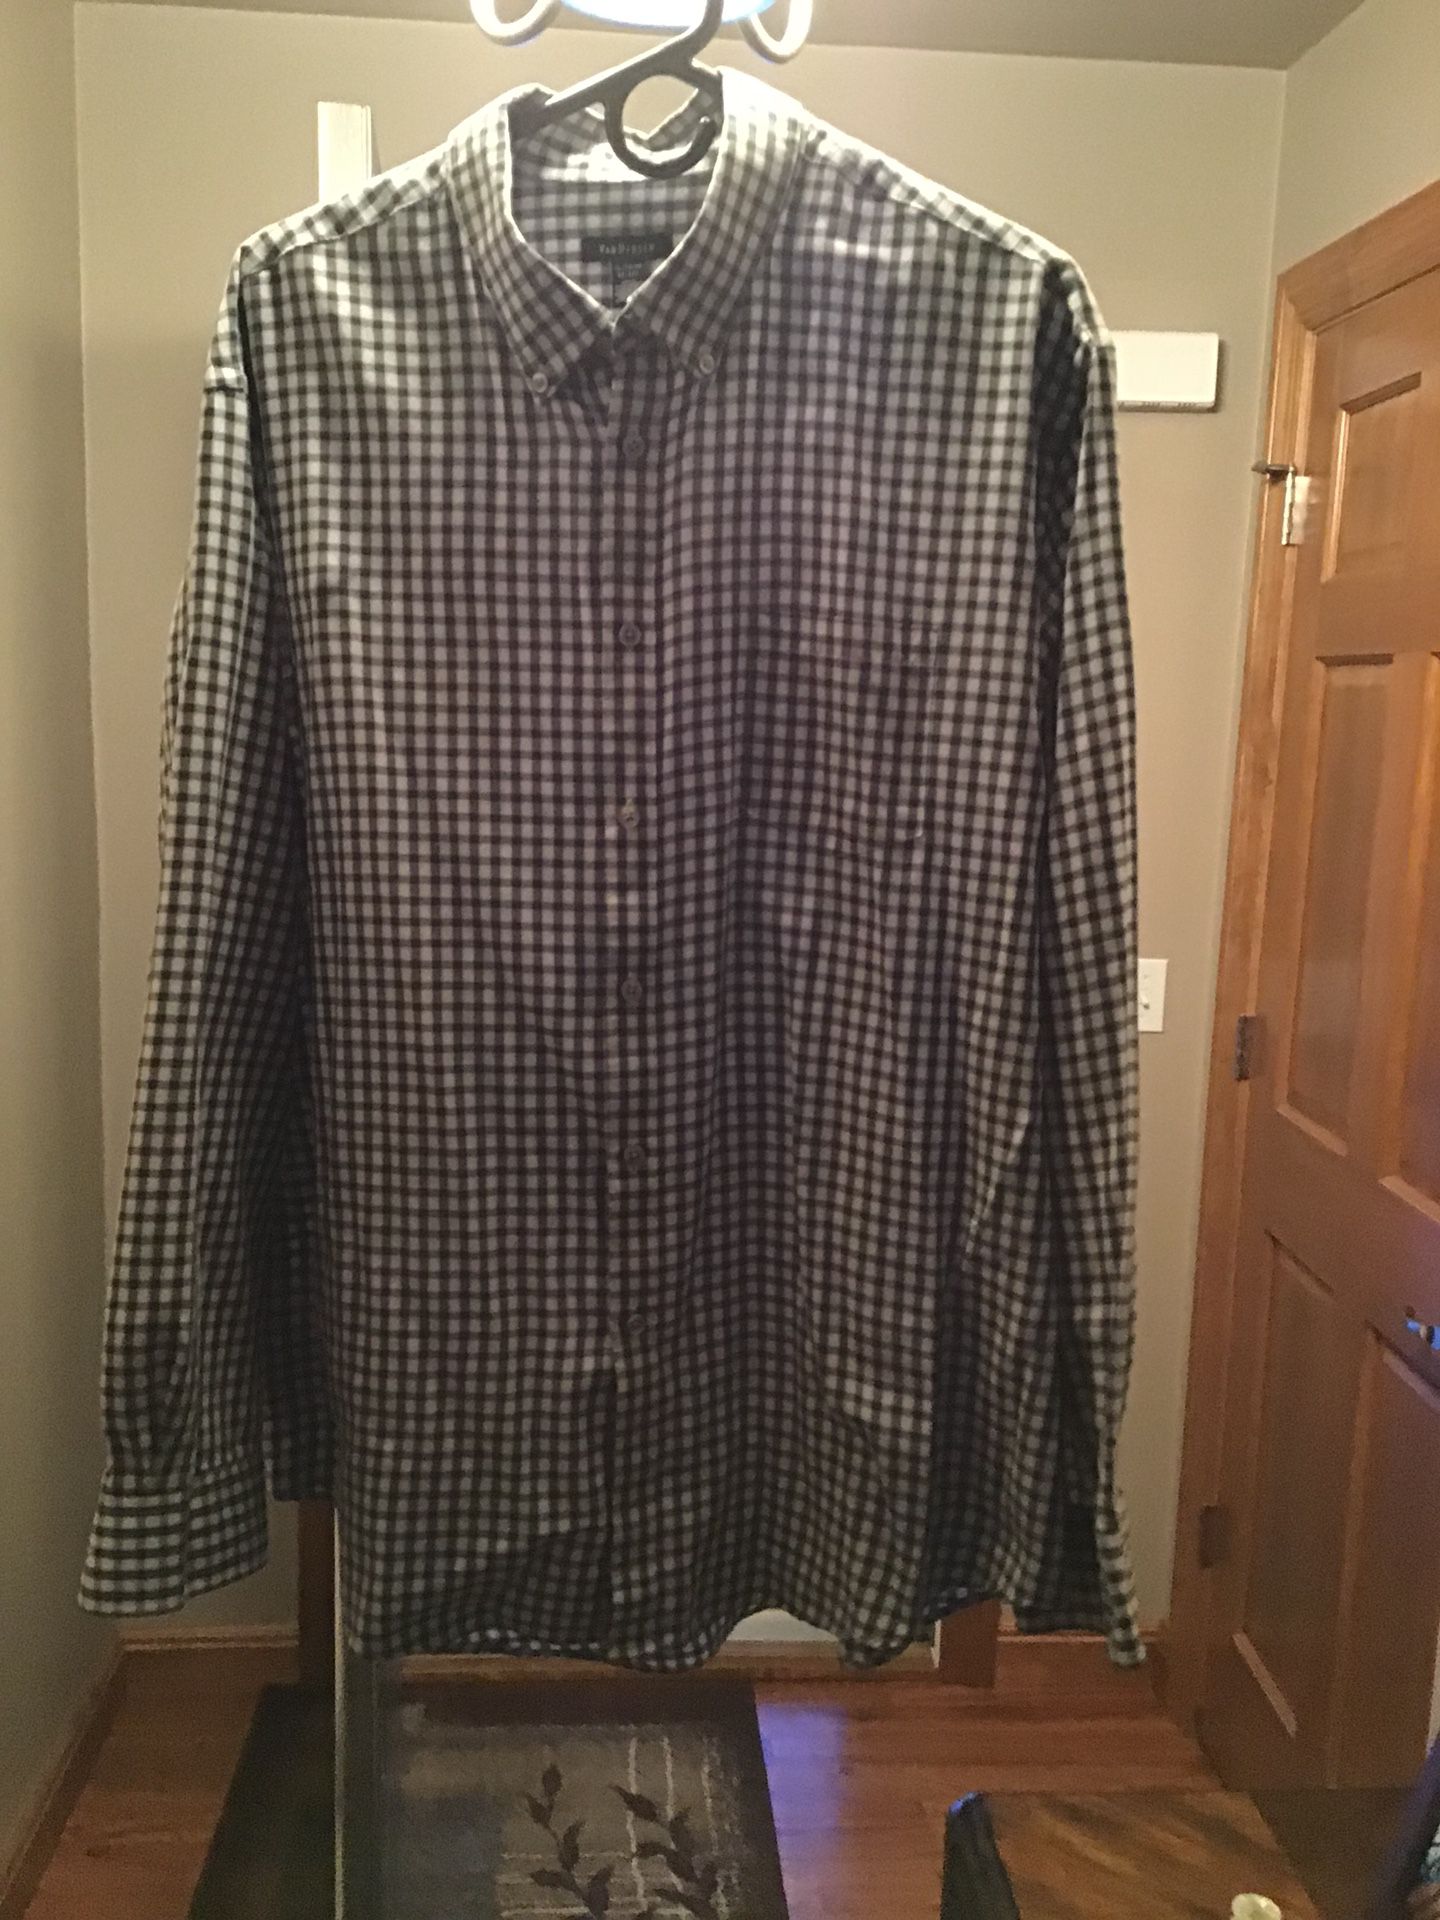 Men’s XL (17-17 1/2) black and white Van Heusen dress shirt.